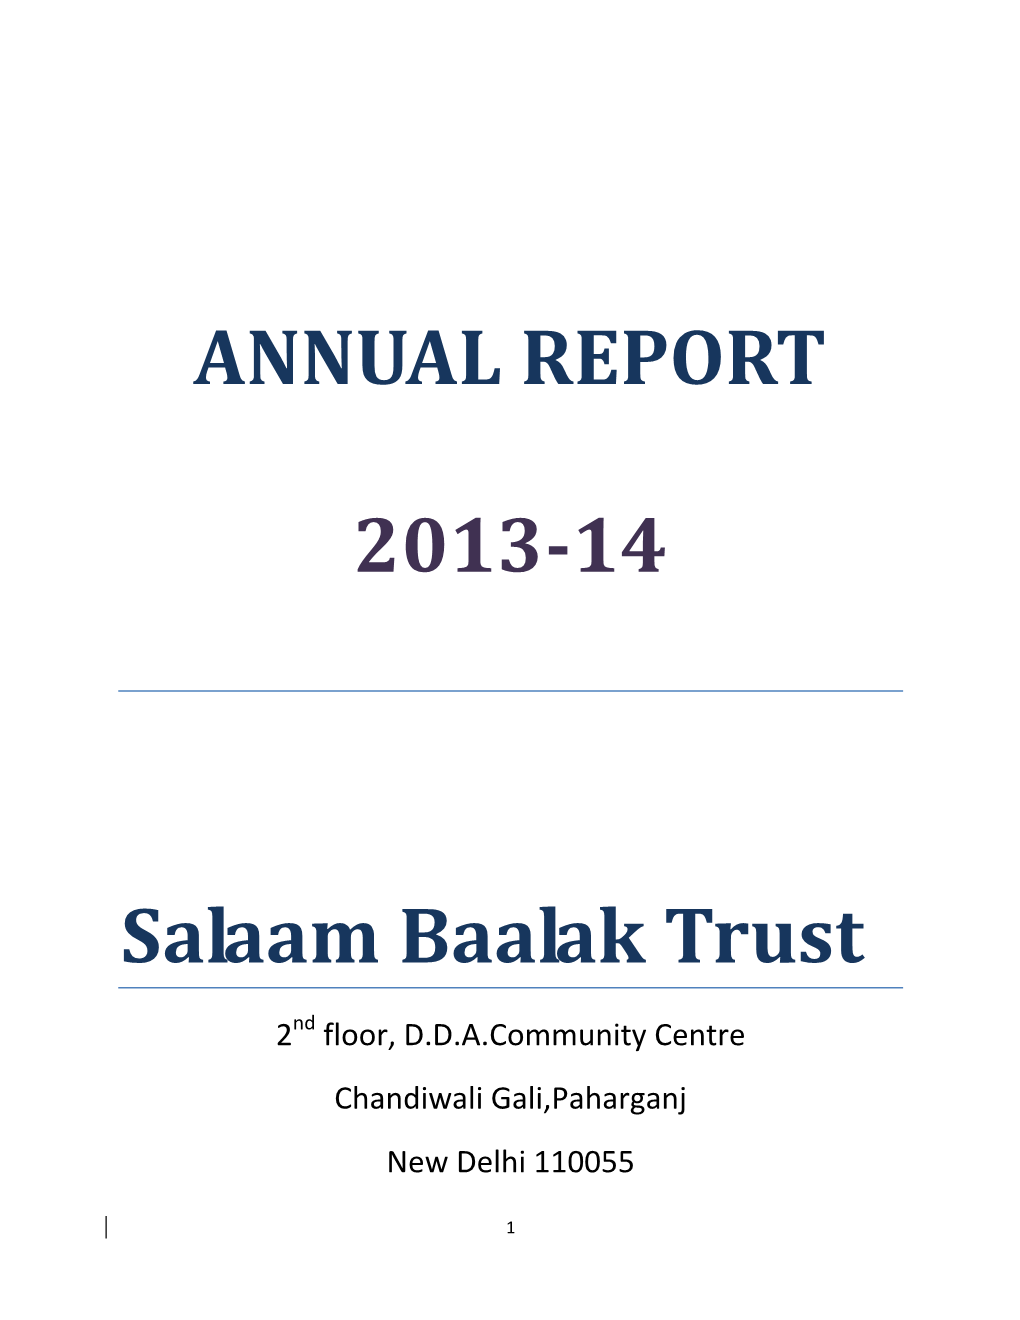 ANNUAL REPORT 2013-14 Salaam Baalak Trust